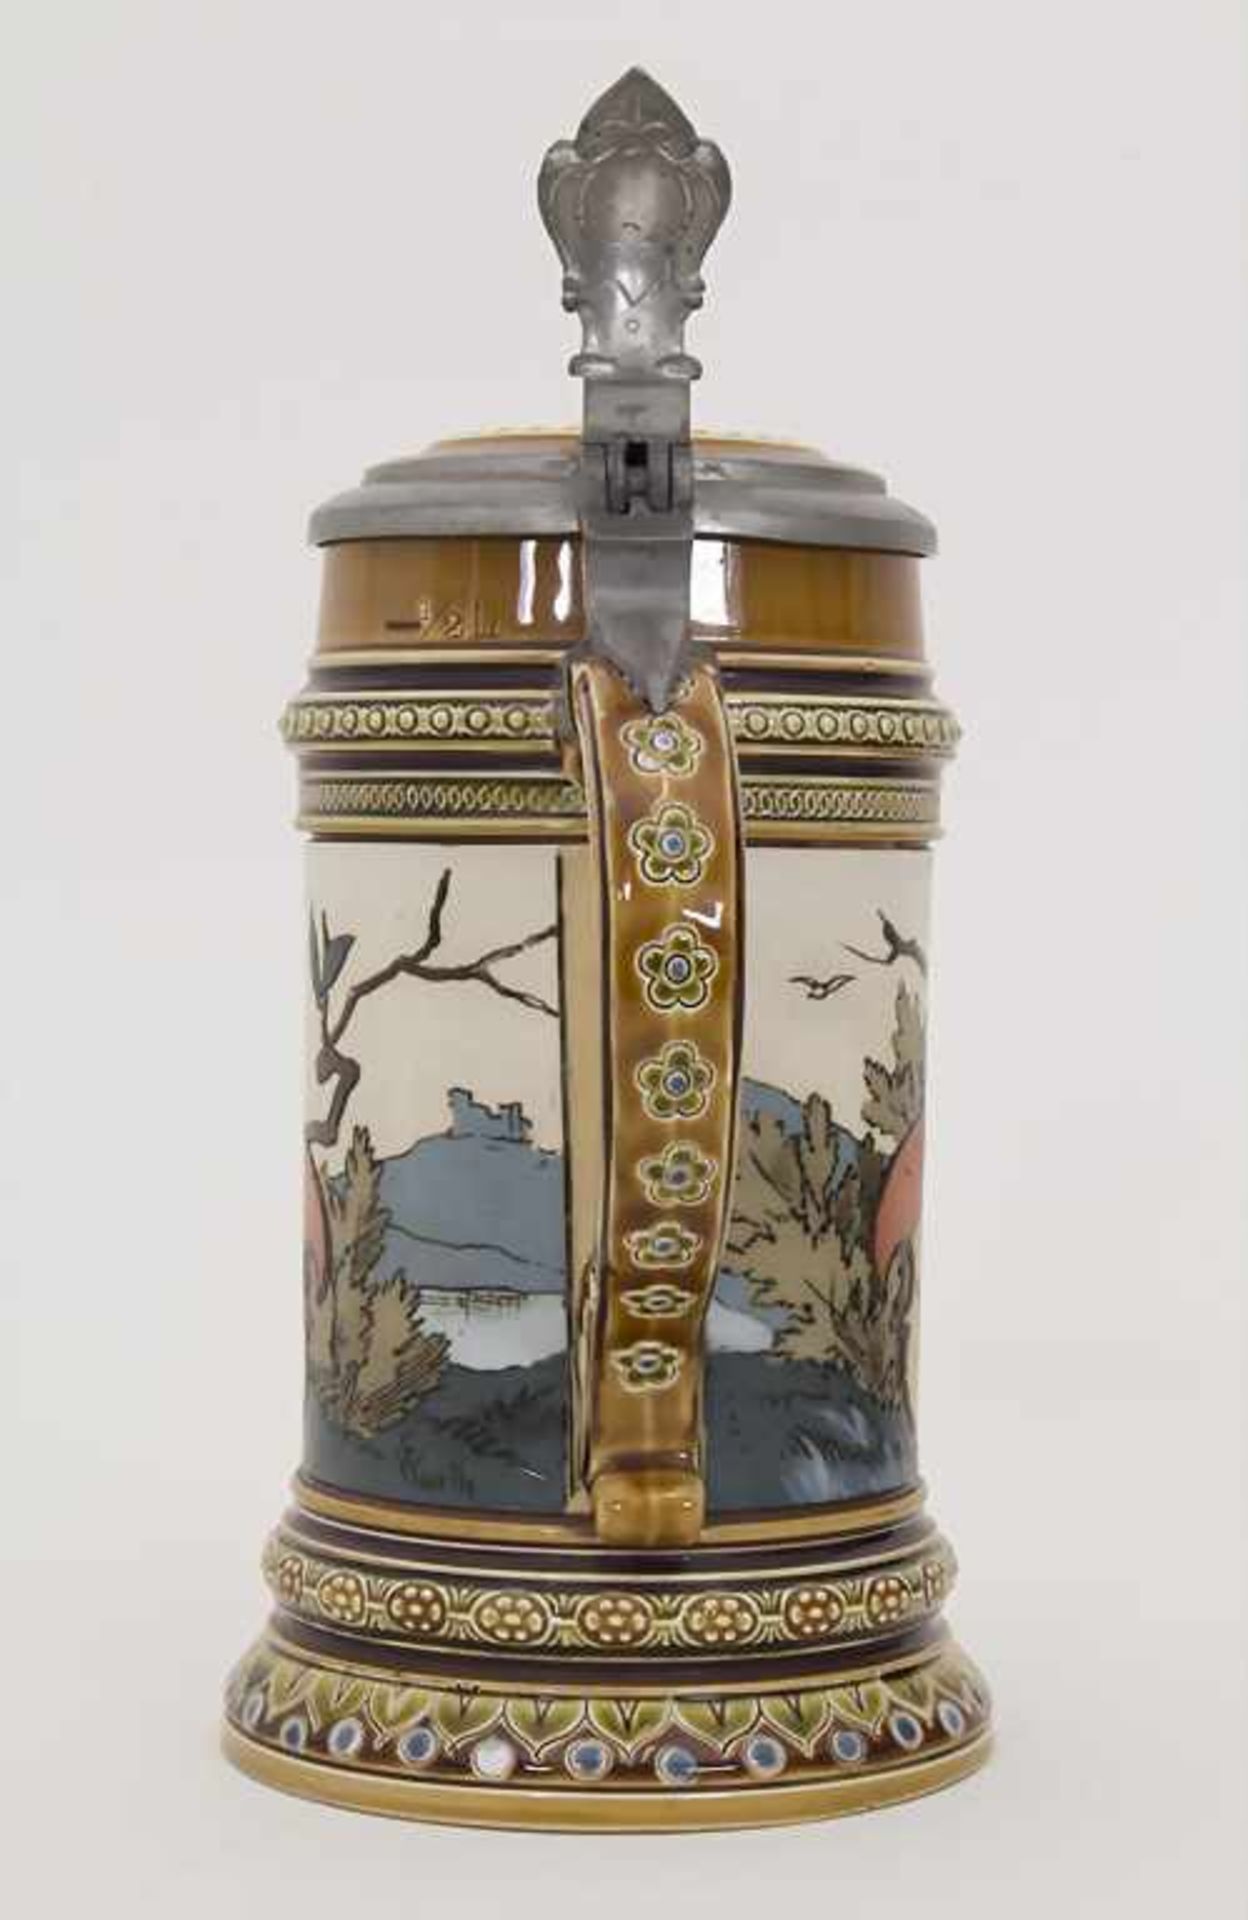 Bierkrug 0,5 L / A stoneware beer mug, Mettlach, Entwurf Christian Warth, um 1894 - Image 3 of 8